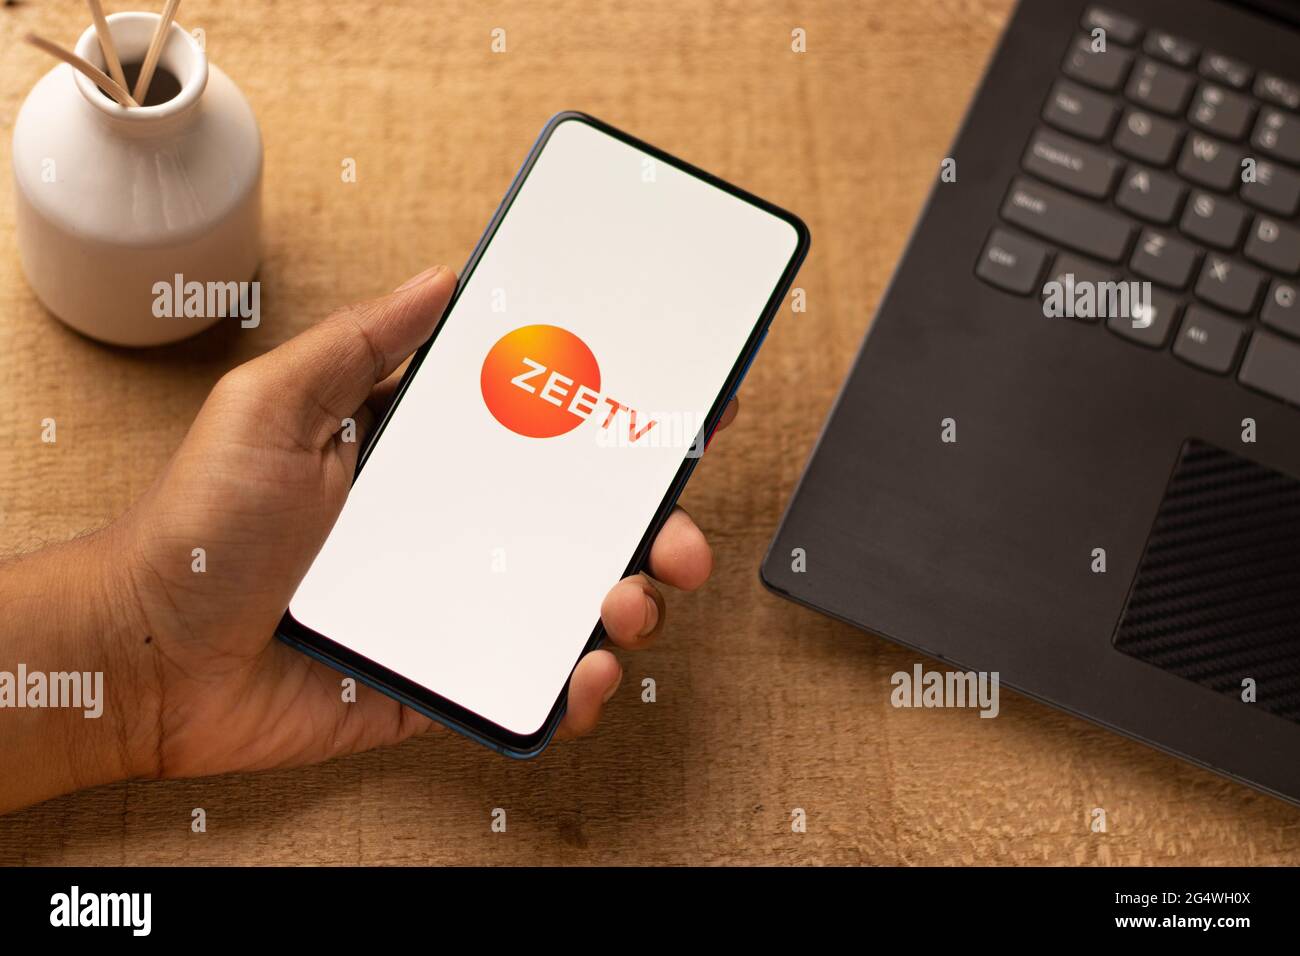 Zee TV logo on phone screen stock image. Stock Photo